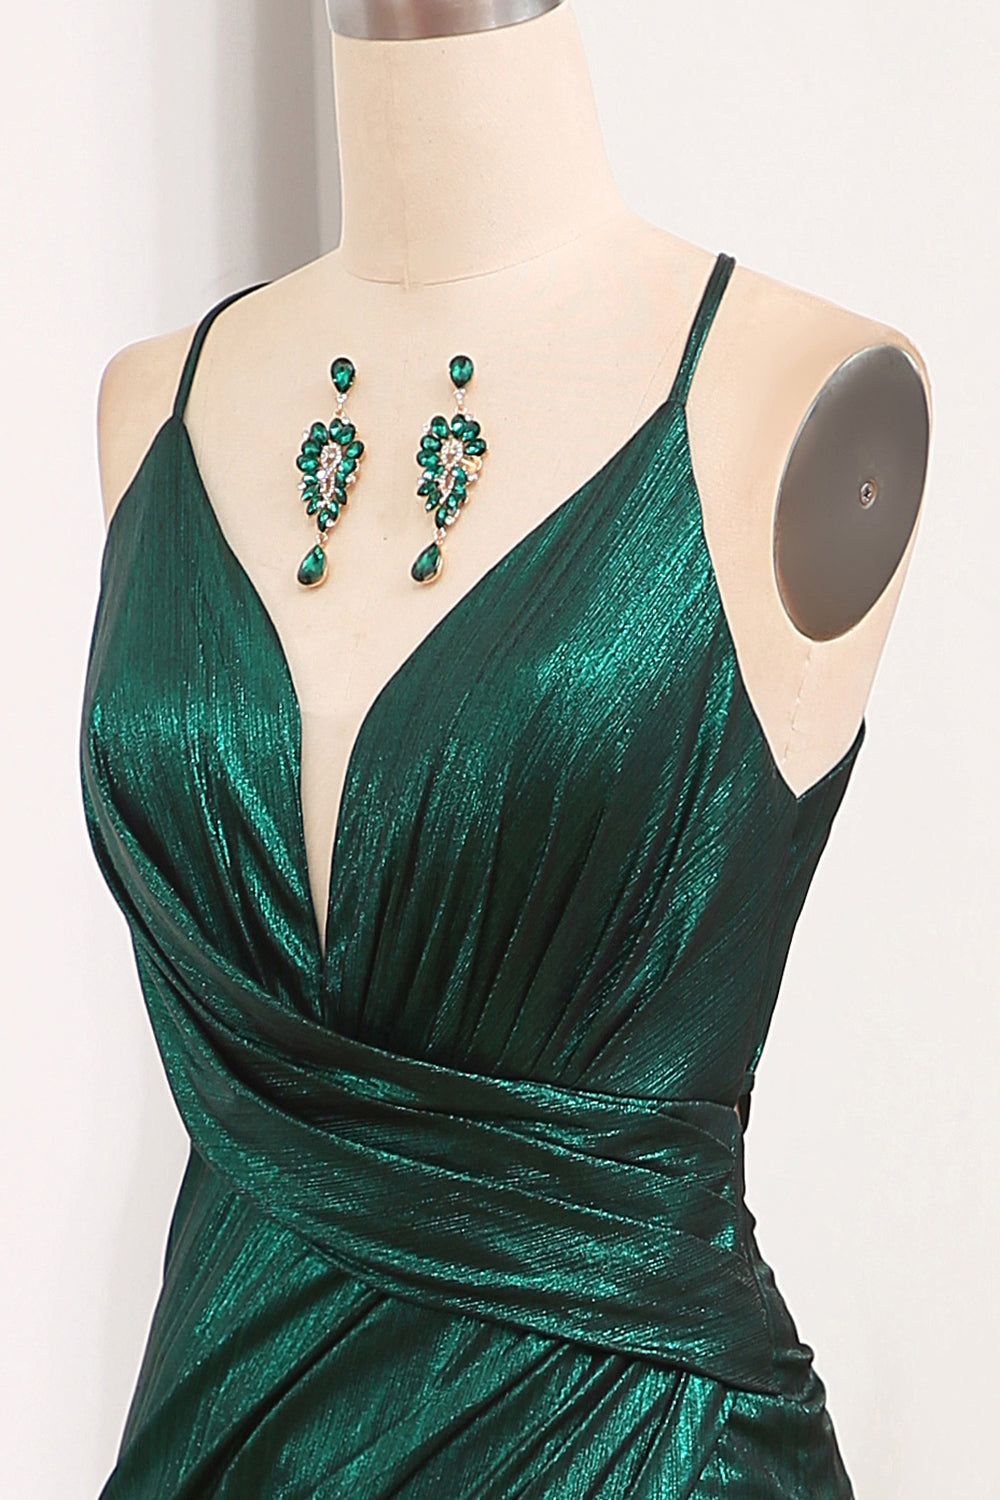 Mermaid Spaghetti Straps Long Dark Green Prom Dress with Open Back